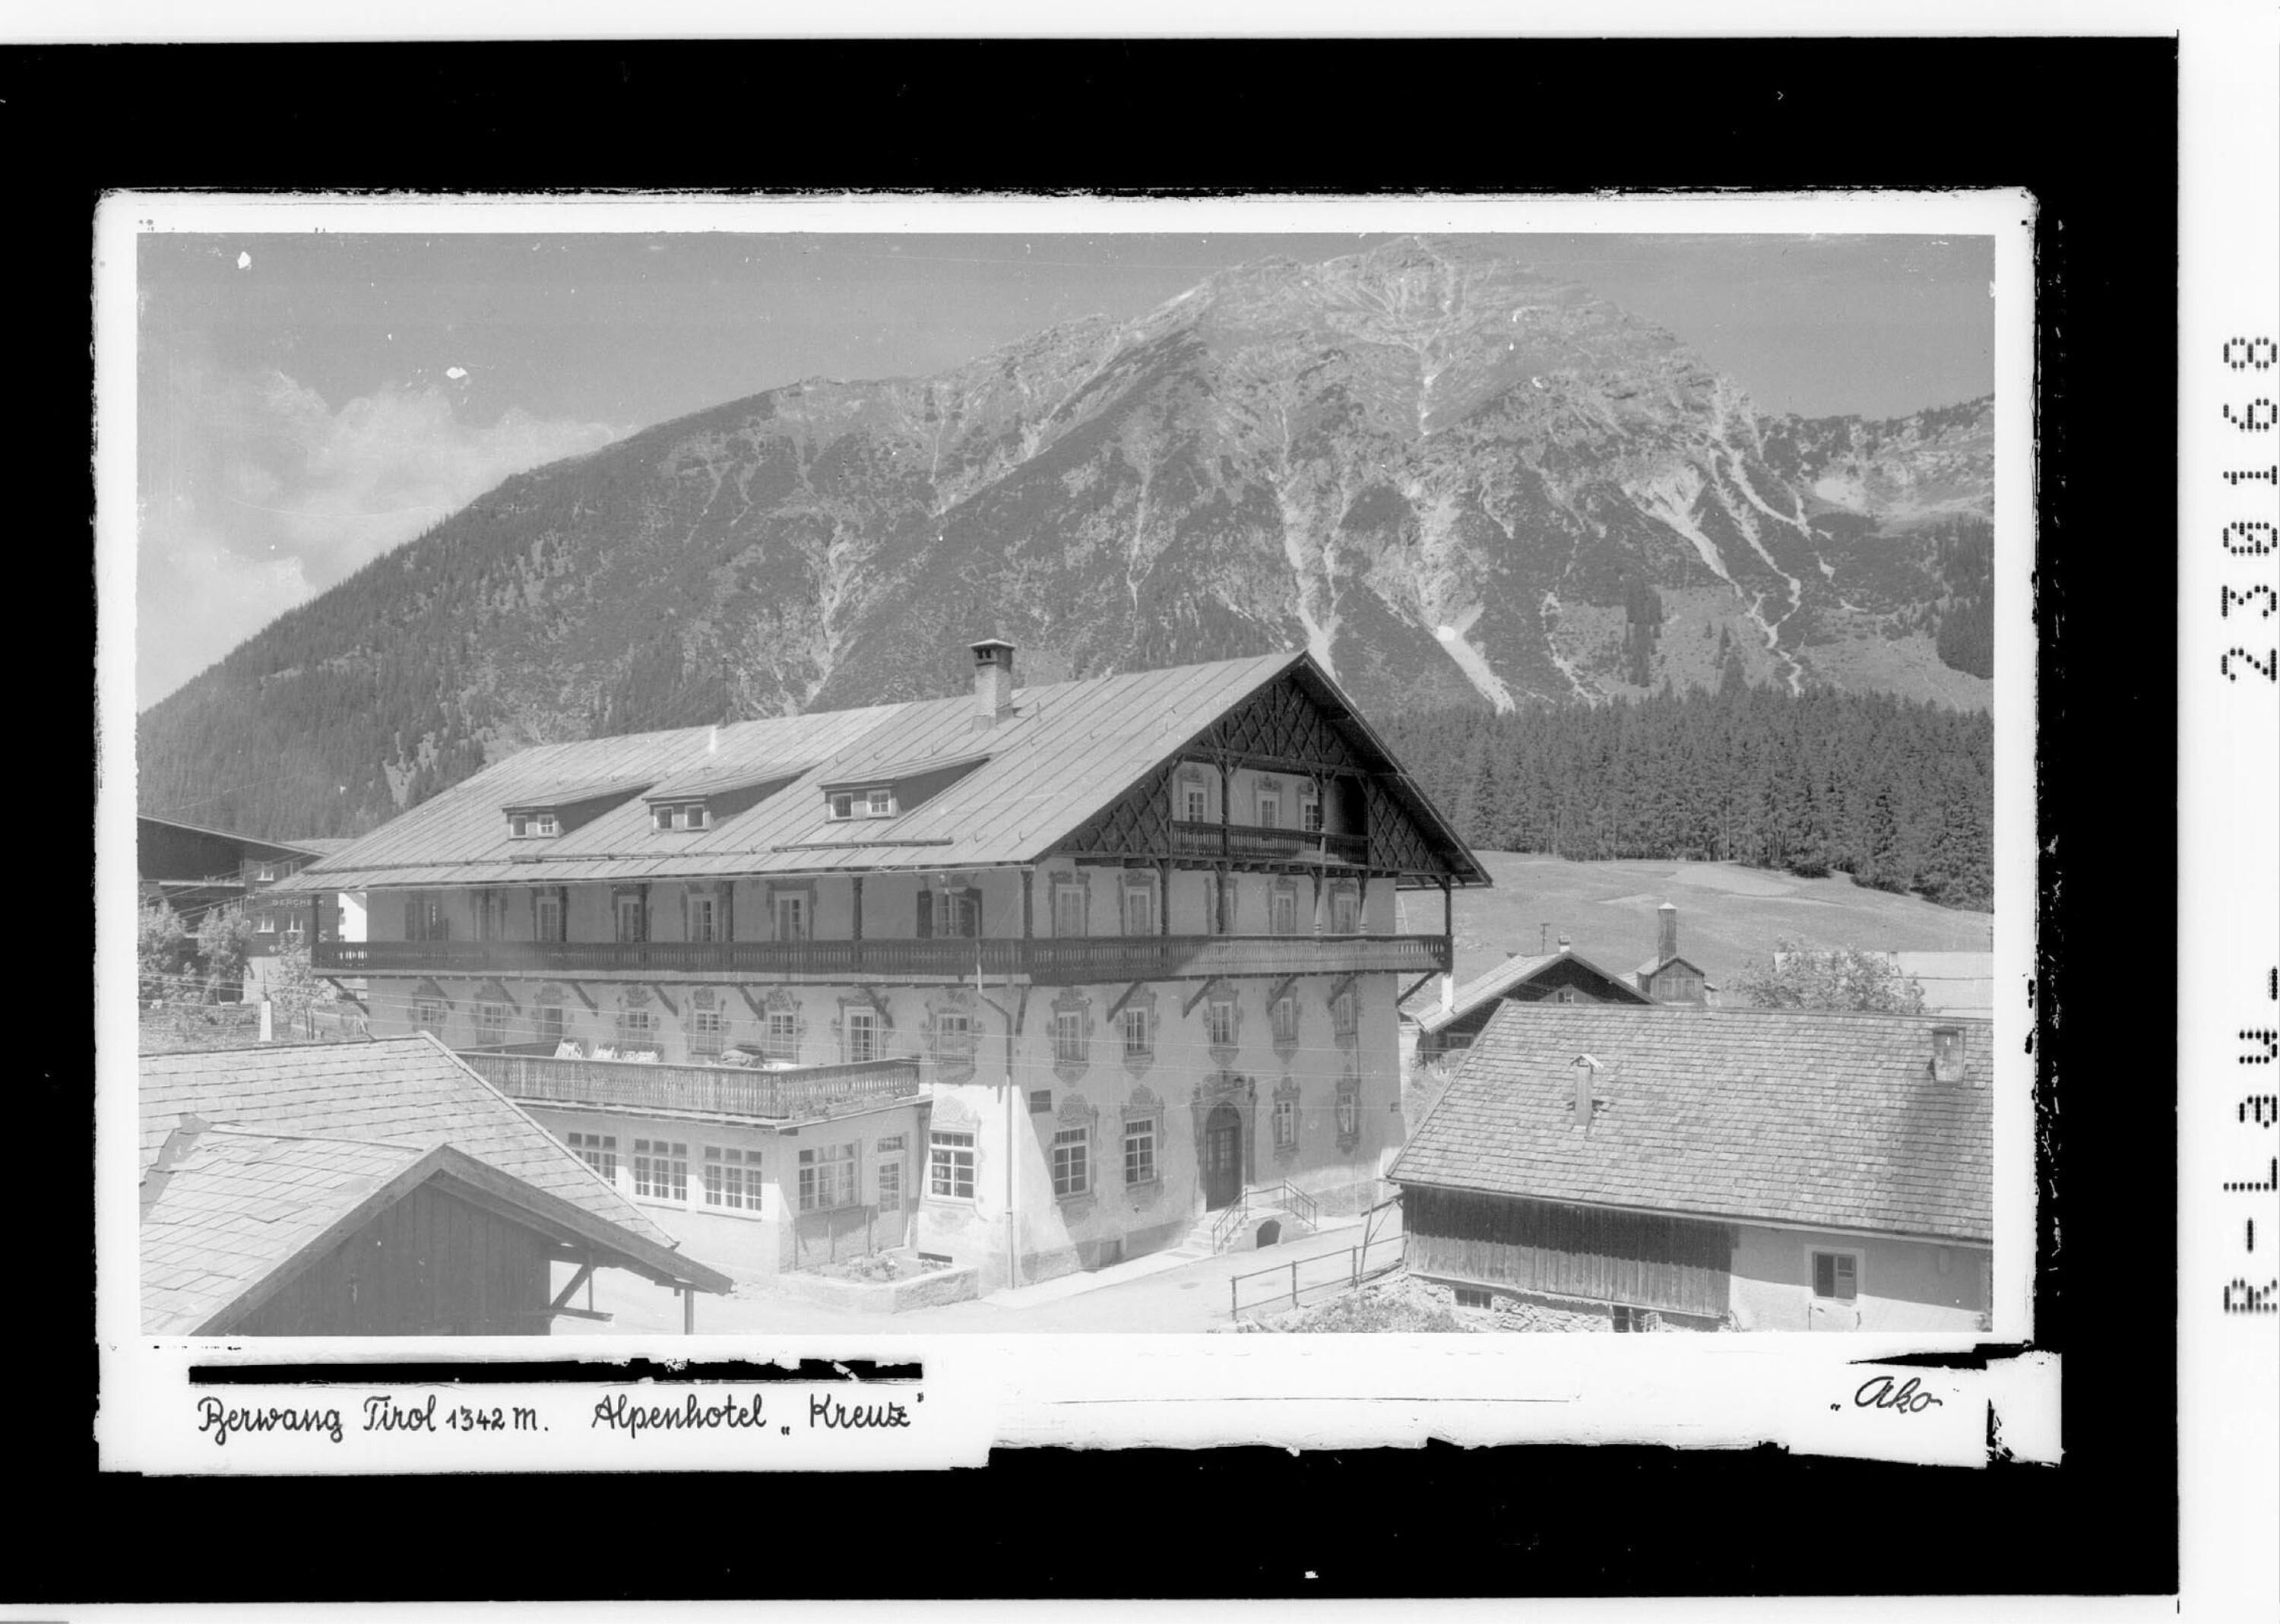 Berwang - Tirol 1342 m / Alpenhotel Kreuz></div>


    <hr>
    <div class=